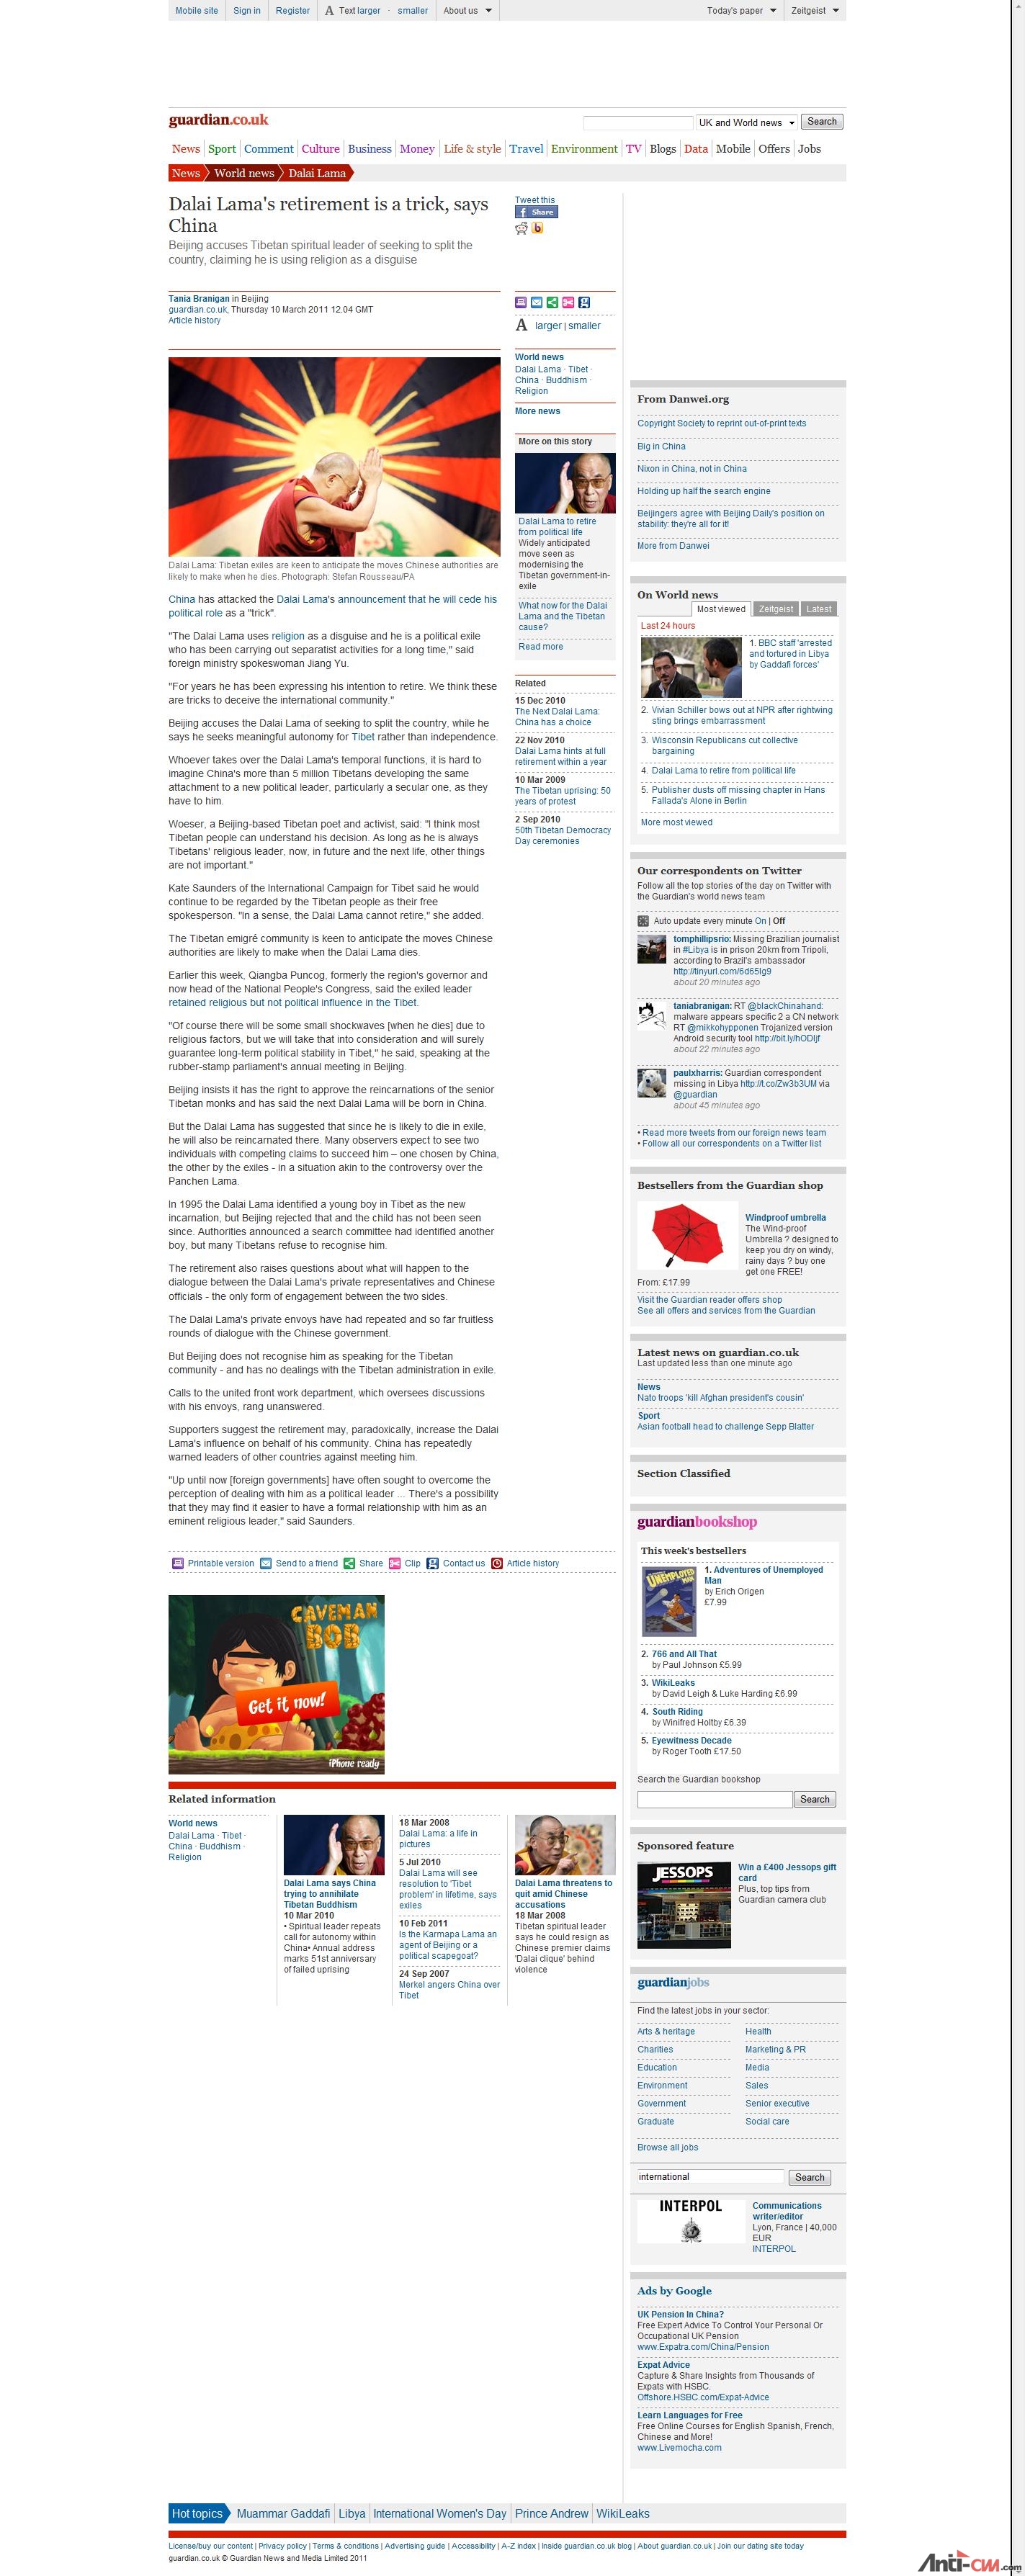 Dalai Lama\'s retirement is a trick, says China _ World news _ The Guardian.jpg